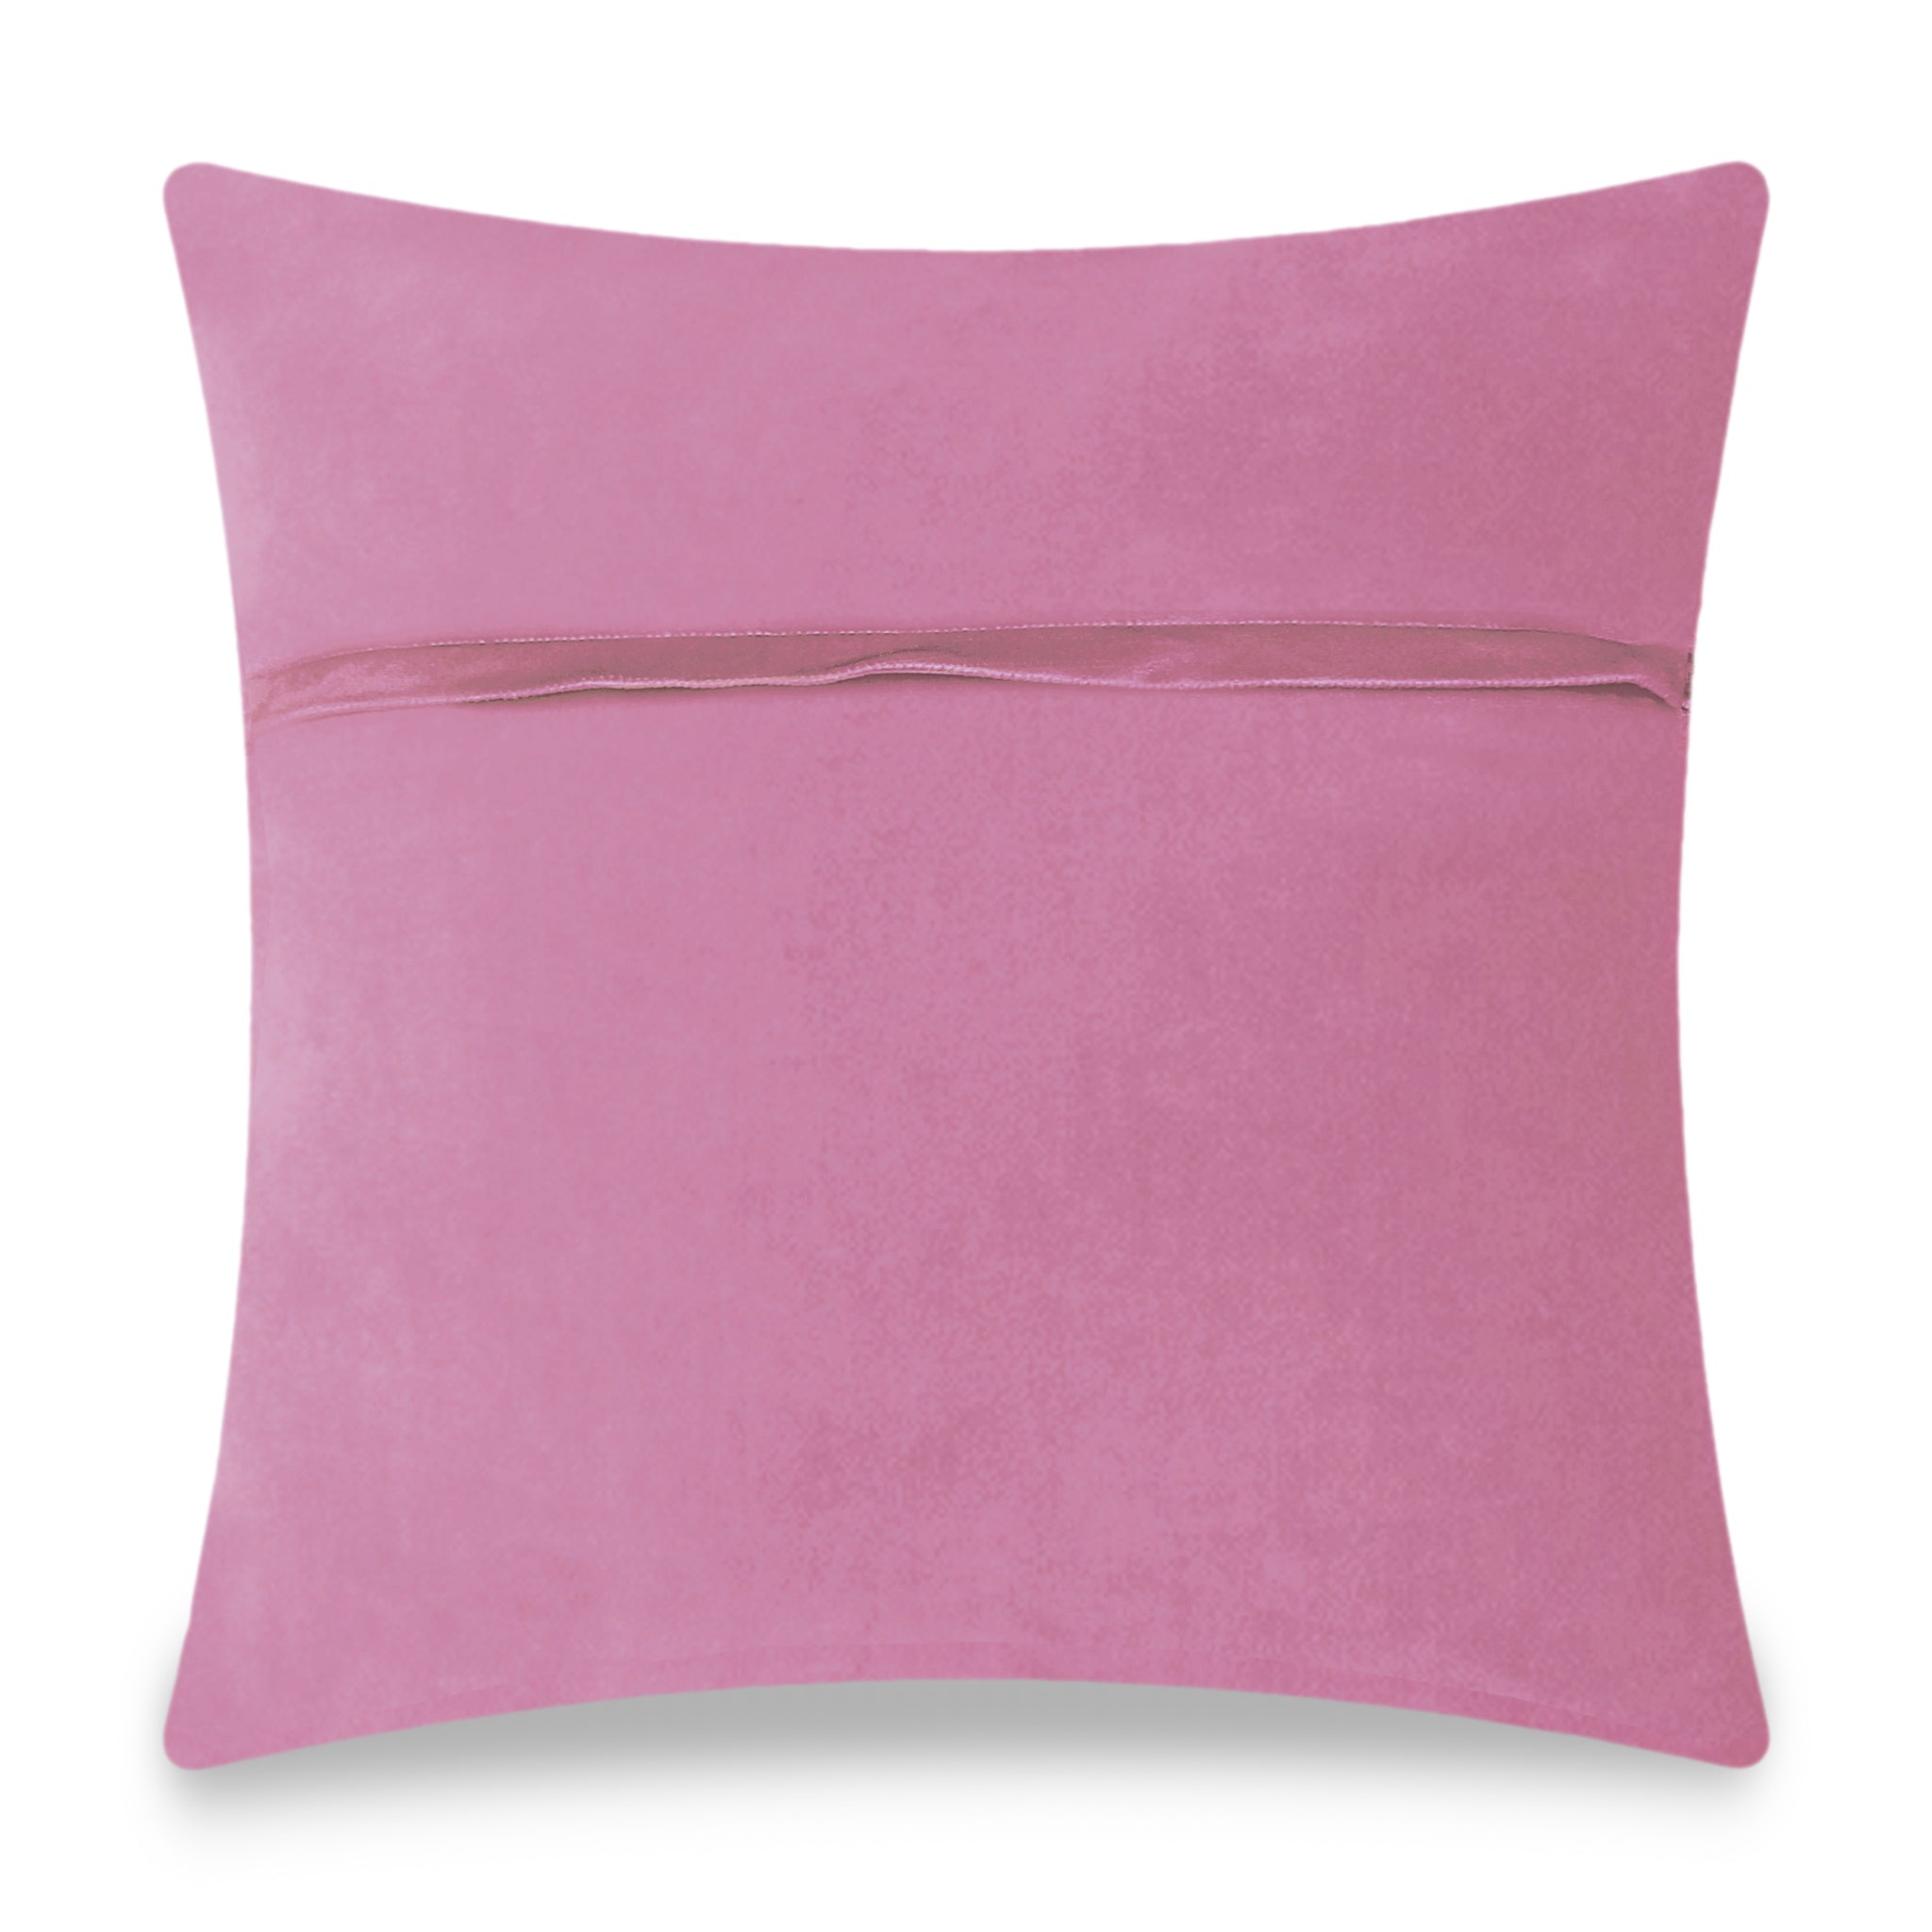  Velvet Cushion Cover Exotic Birds Decorative Pillowcase Classic Home Decor Throw Pillow for Sofa Chair 45x45 cm 